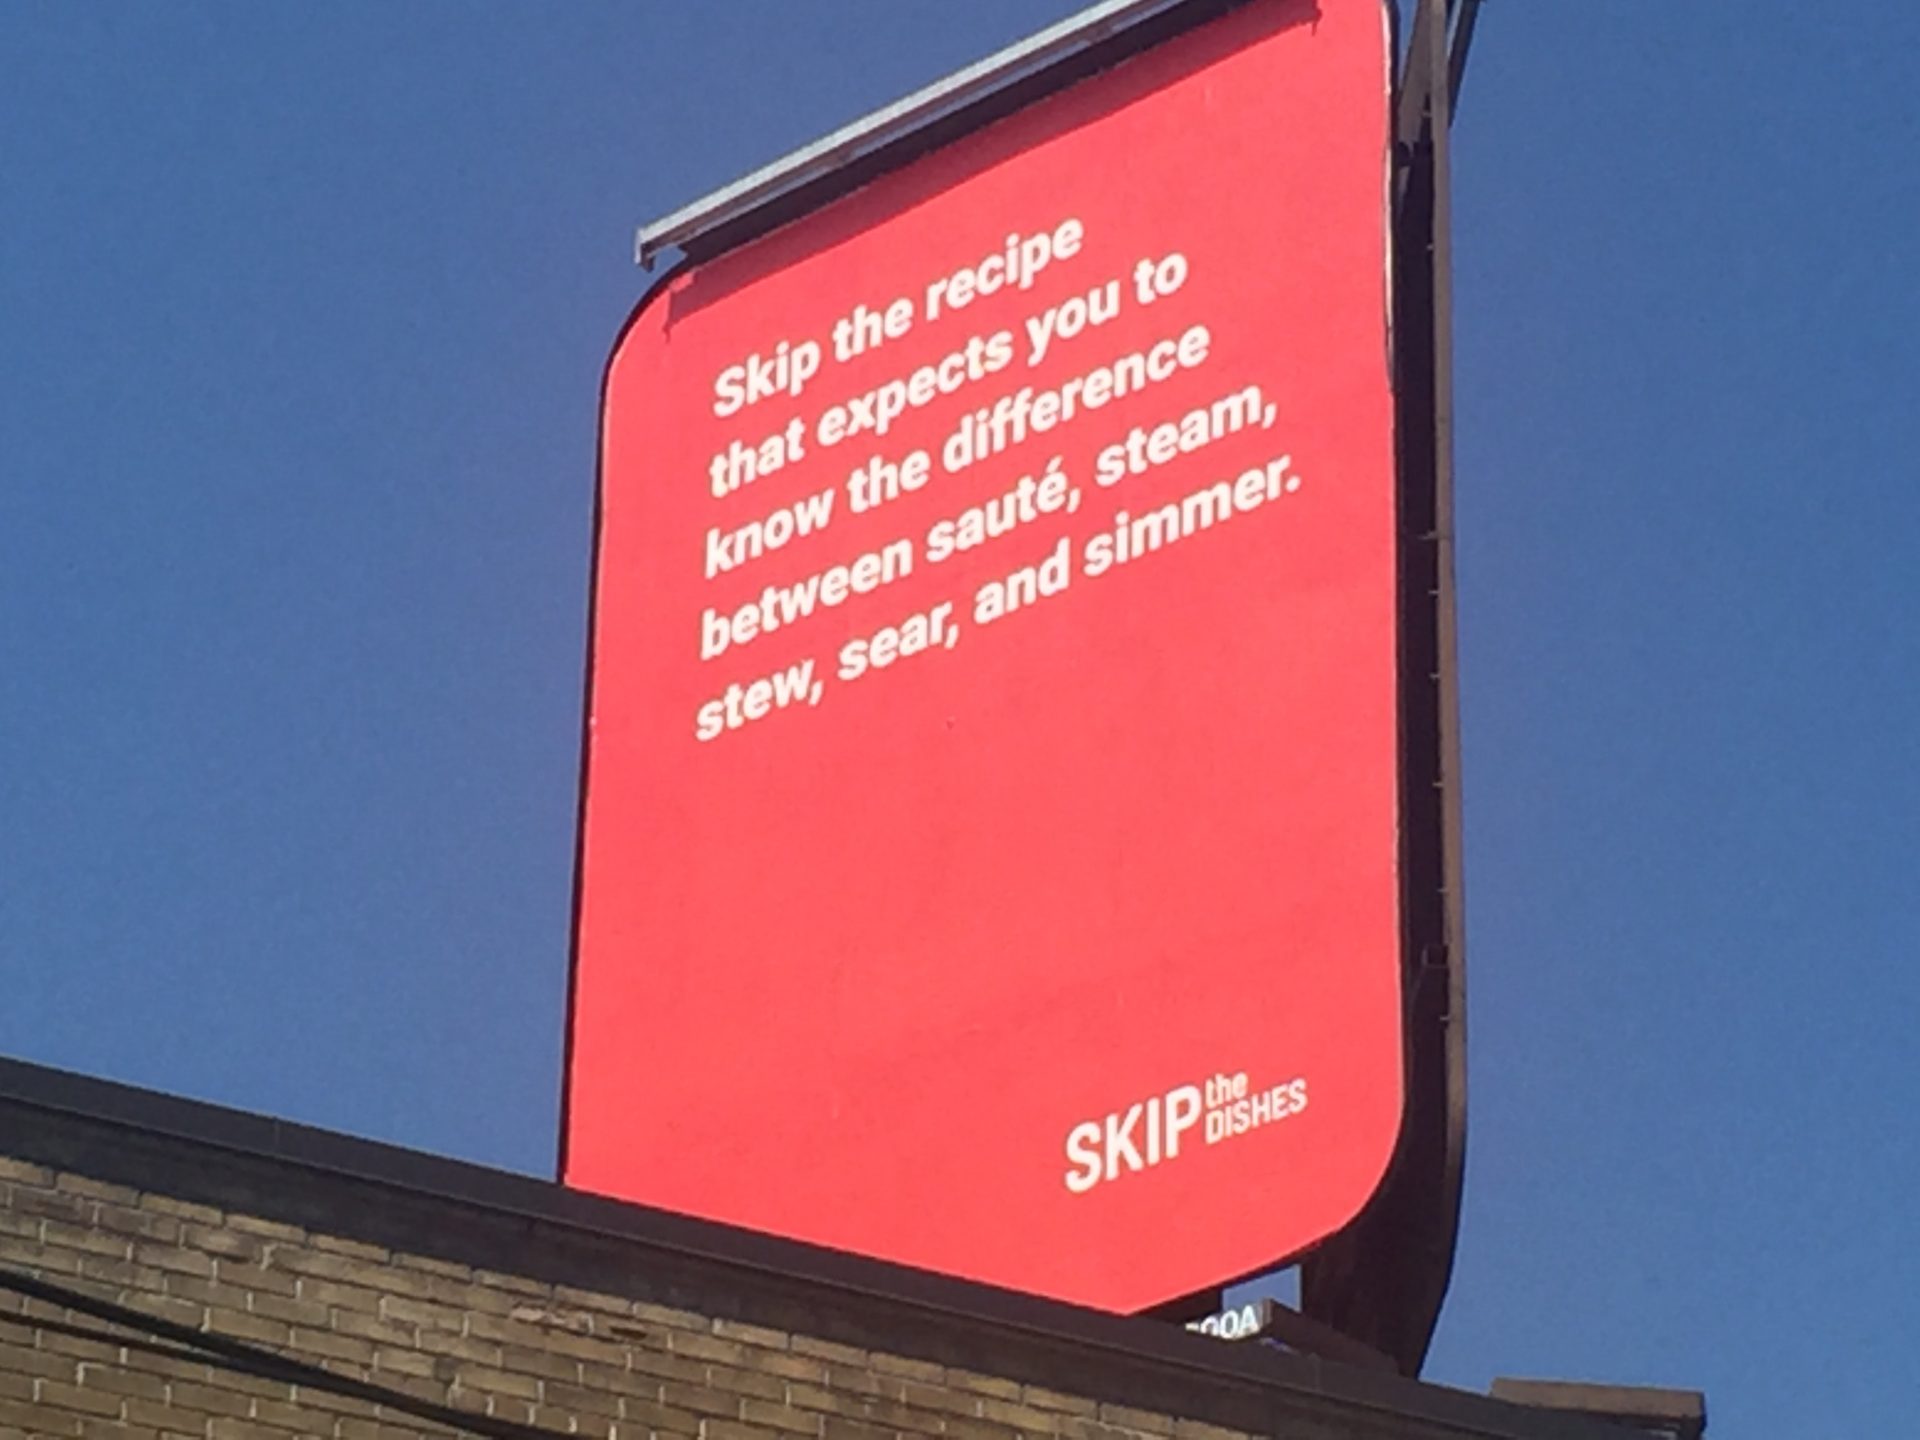 This particular Toronto billboard really irked Good Food Revolution's Jamie Drummond.